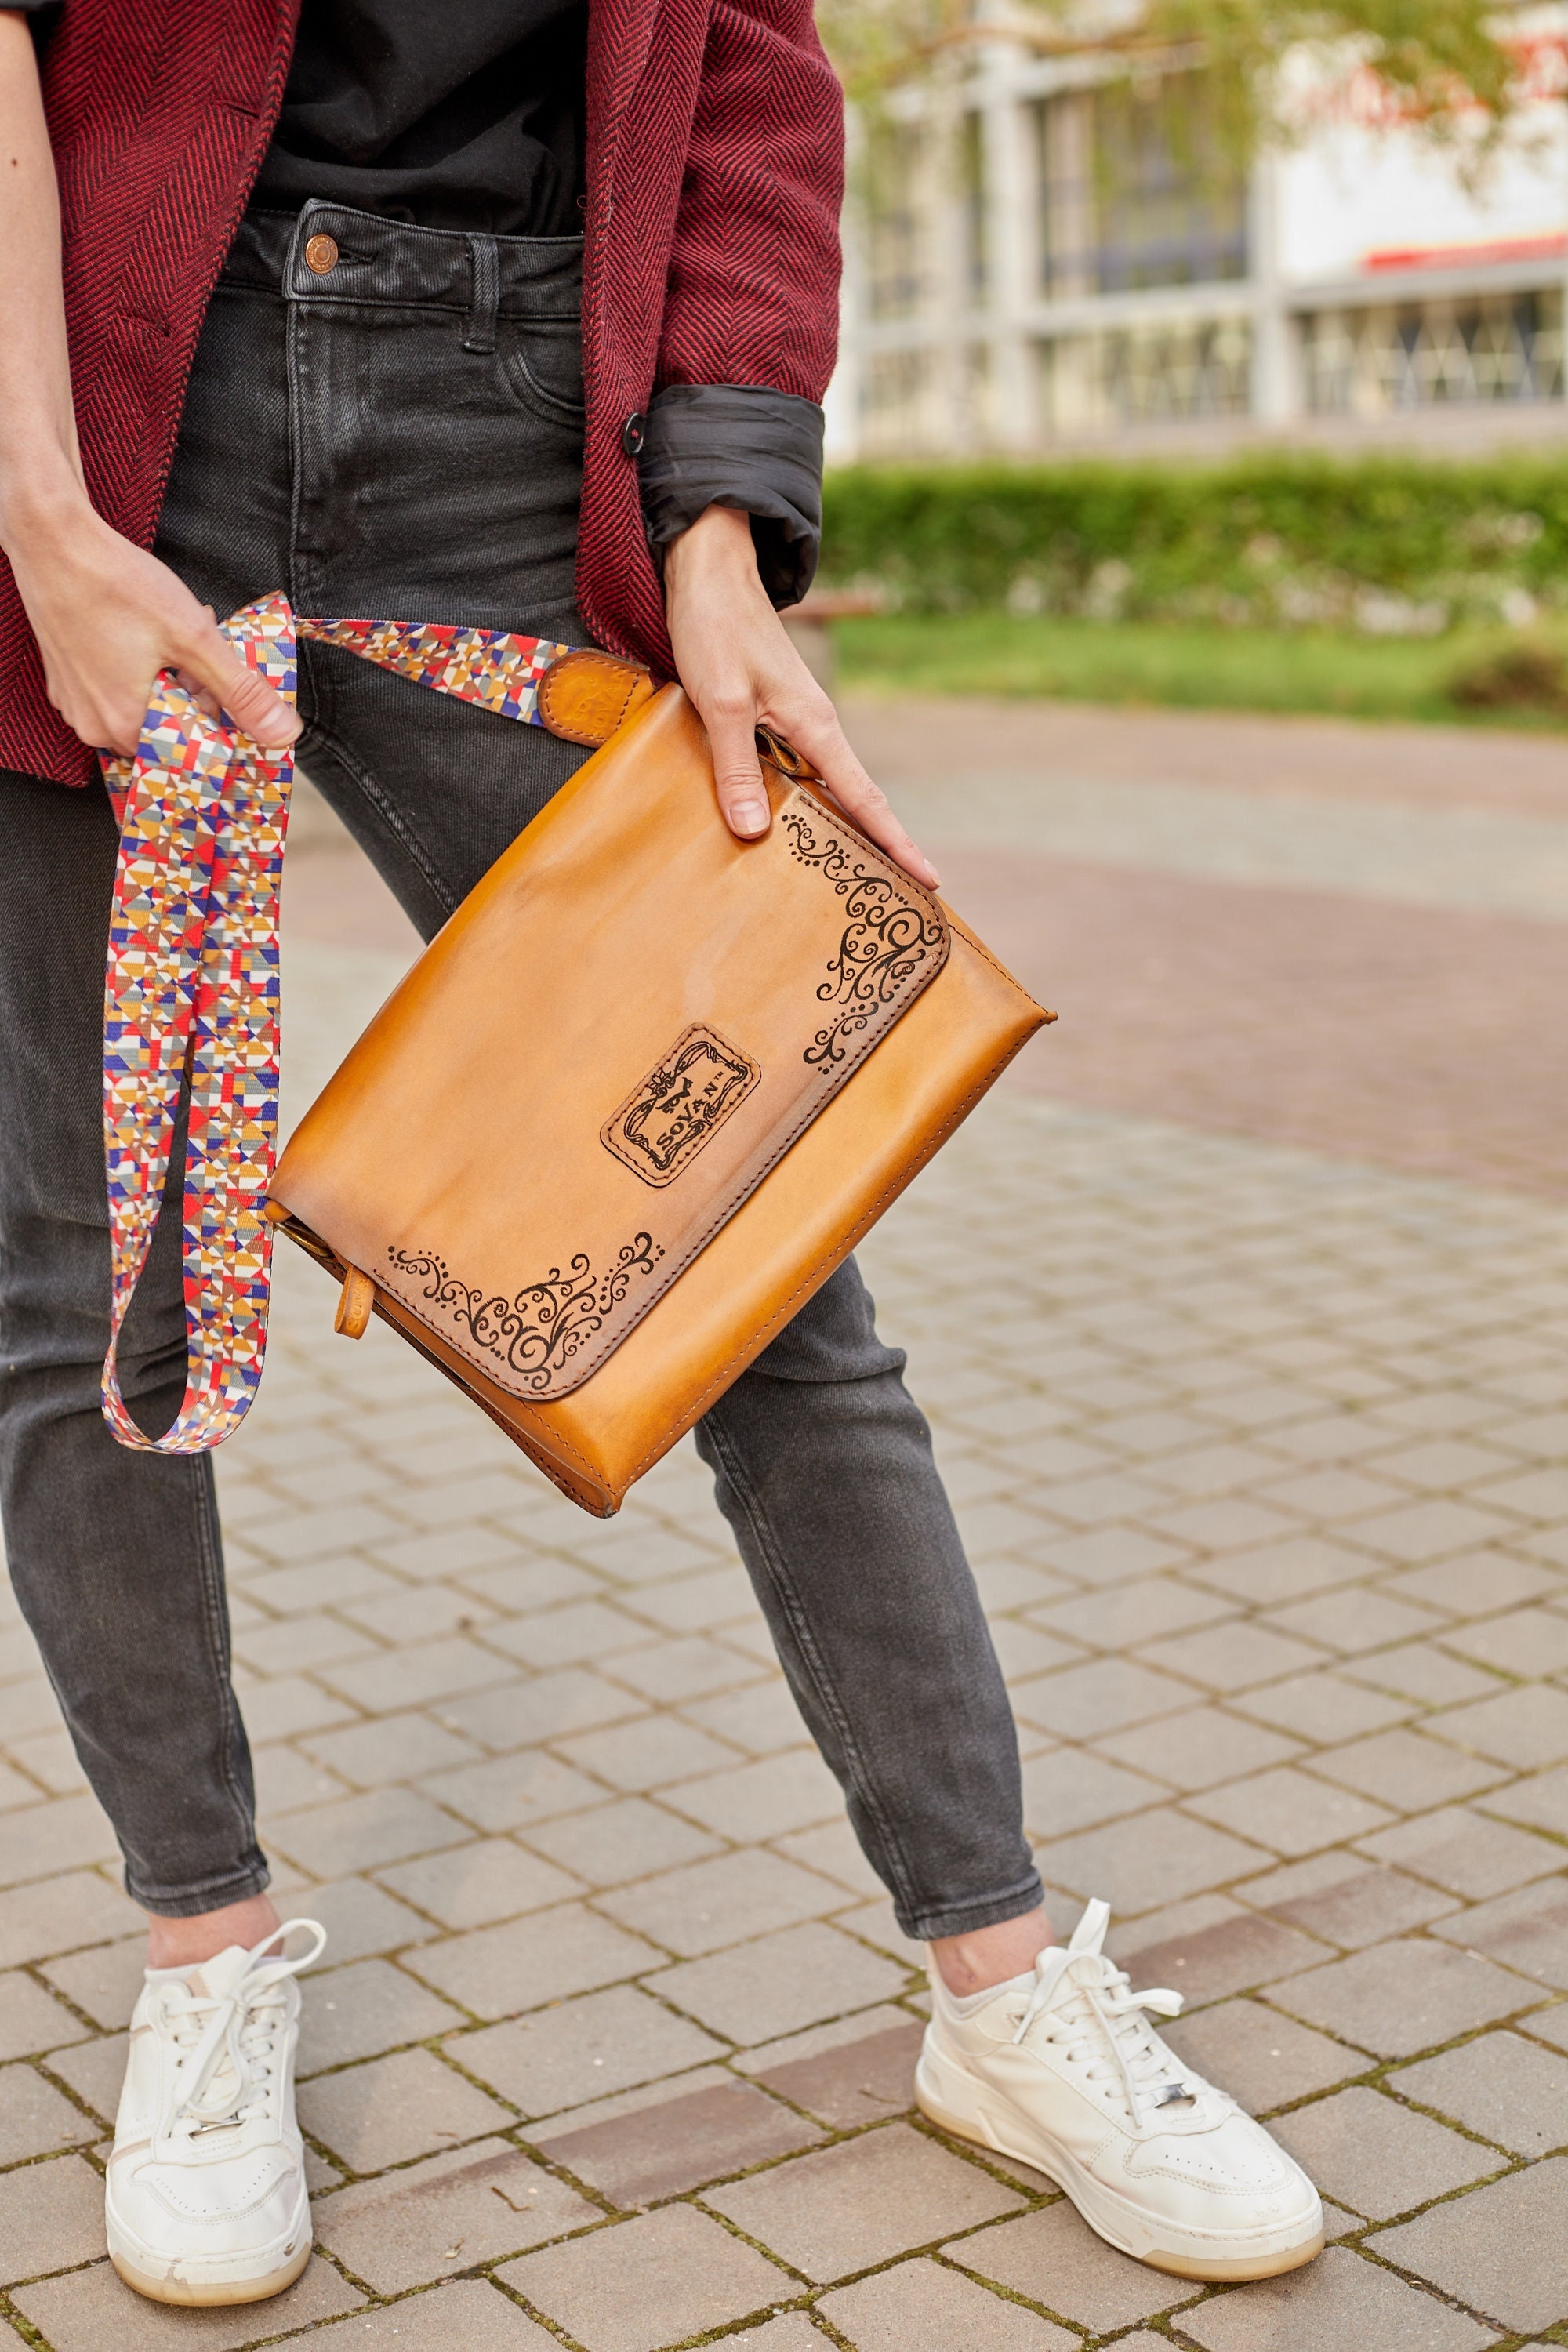  Women Ladies Satchel Canvas Tote Messenger Leather Purse  Shoulder Bag Handbag by Rondaful : Clothing, Shoes & Jewelry